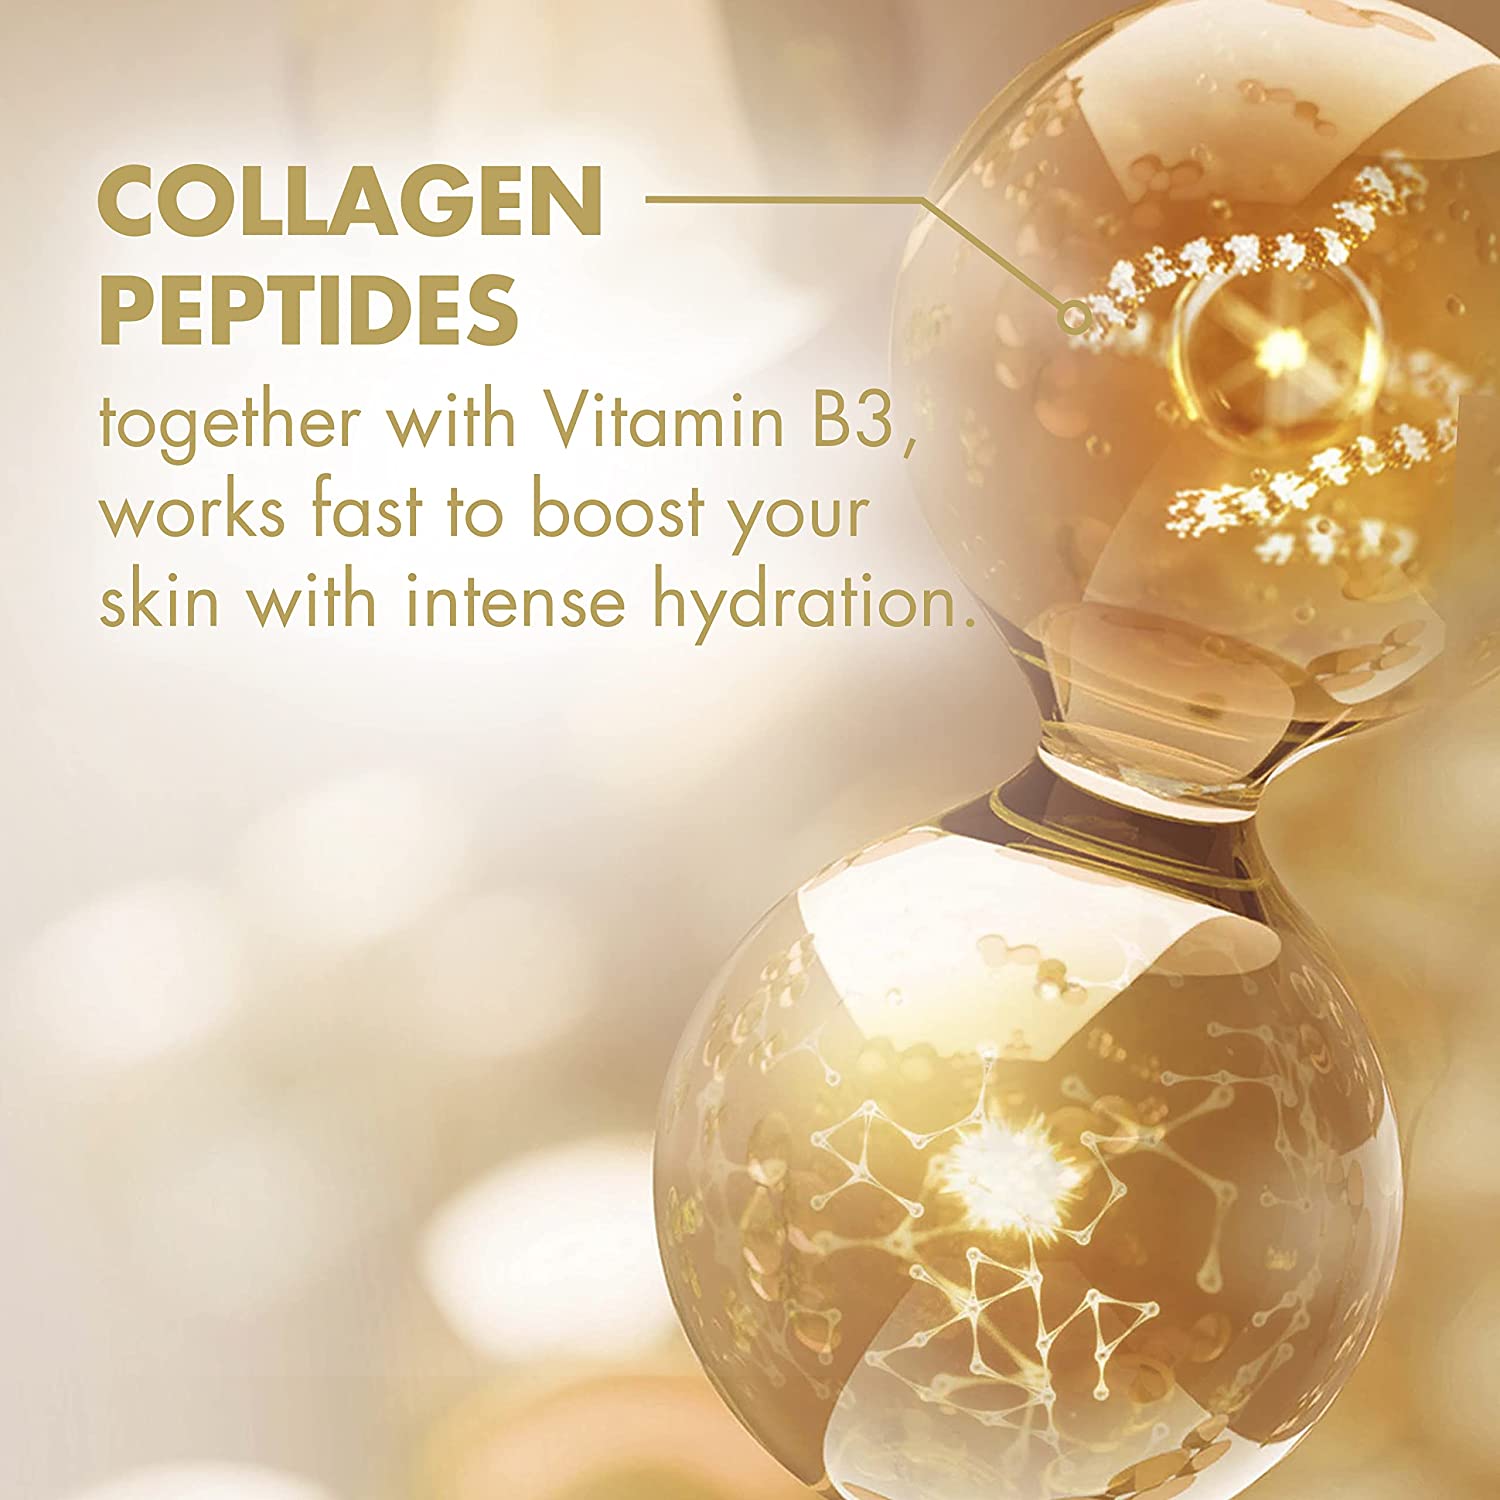 Olay Regenerist Collagen Peptide 24 Face Cream 50ml - Healthxpress.ie